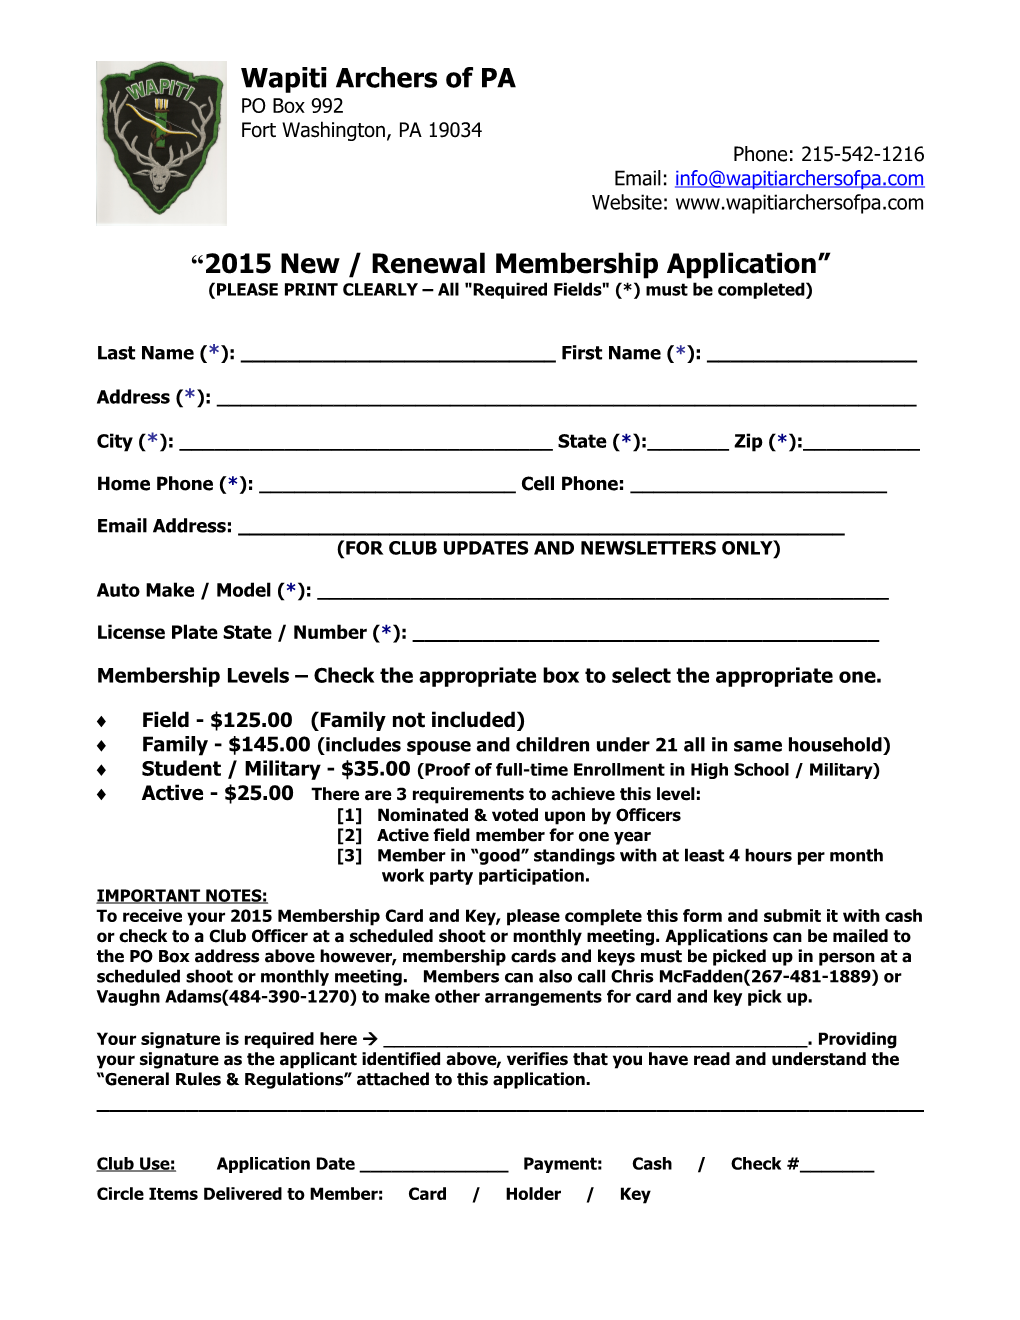 2009 New / Renewal Membership Application